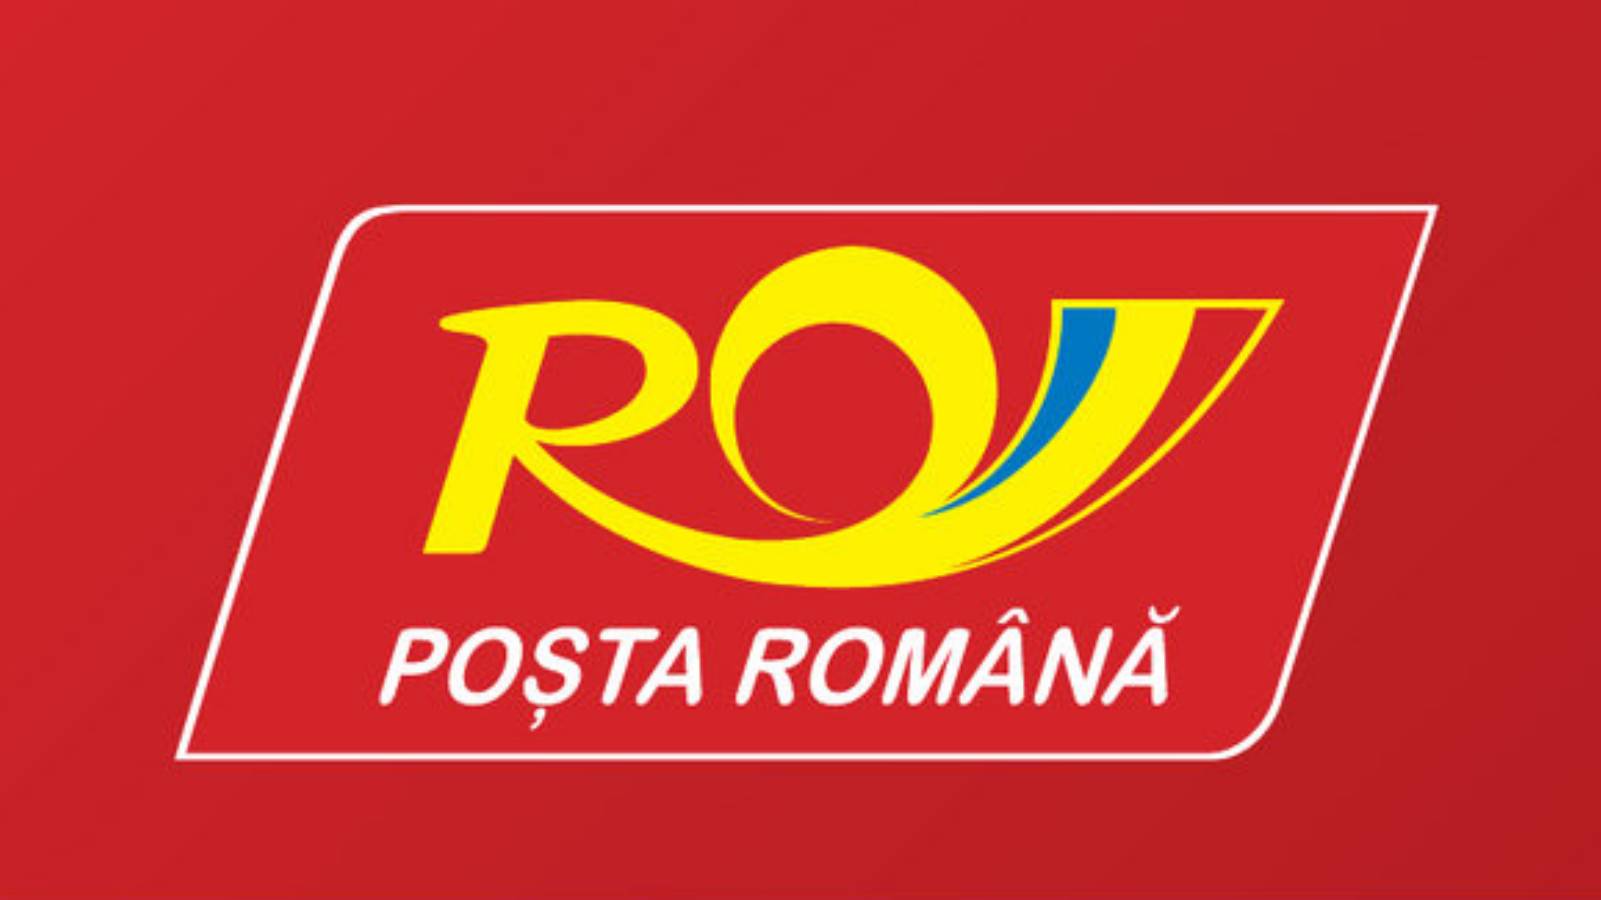 Roemeense Post berekent tarieven